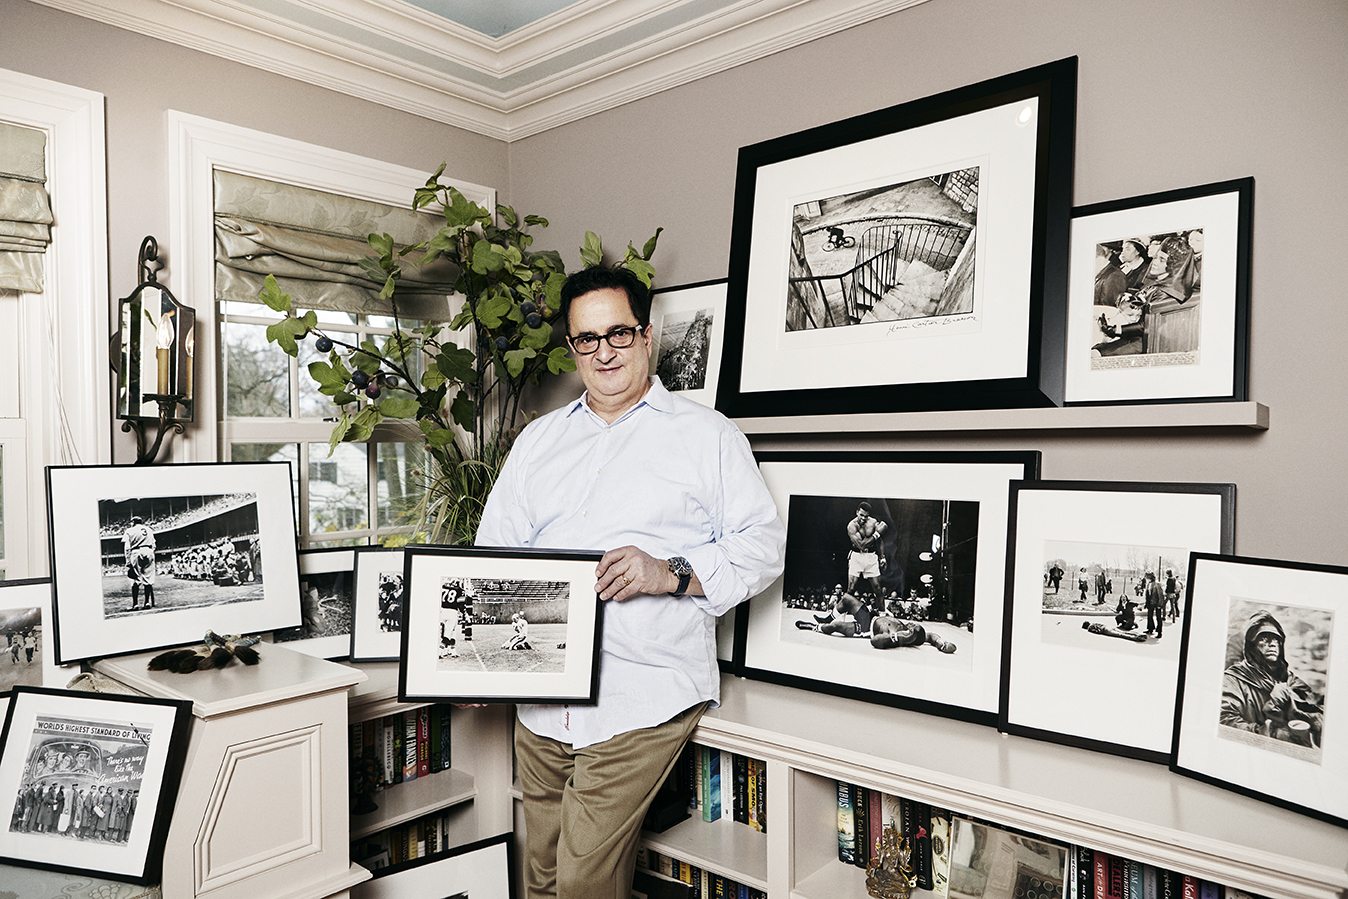 Profile of a Collector: Alan L. Paris and a Century of News Photos